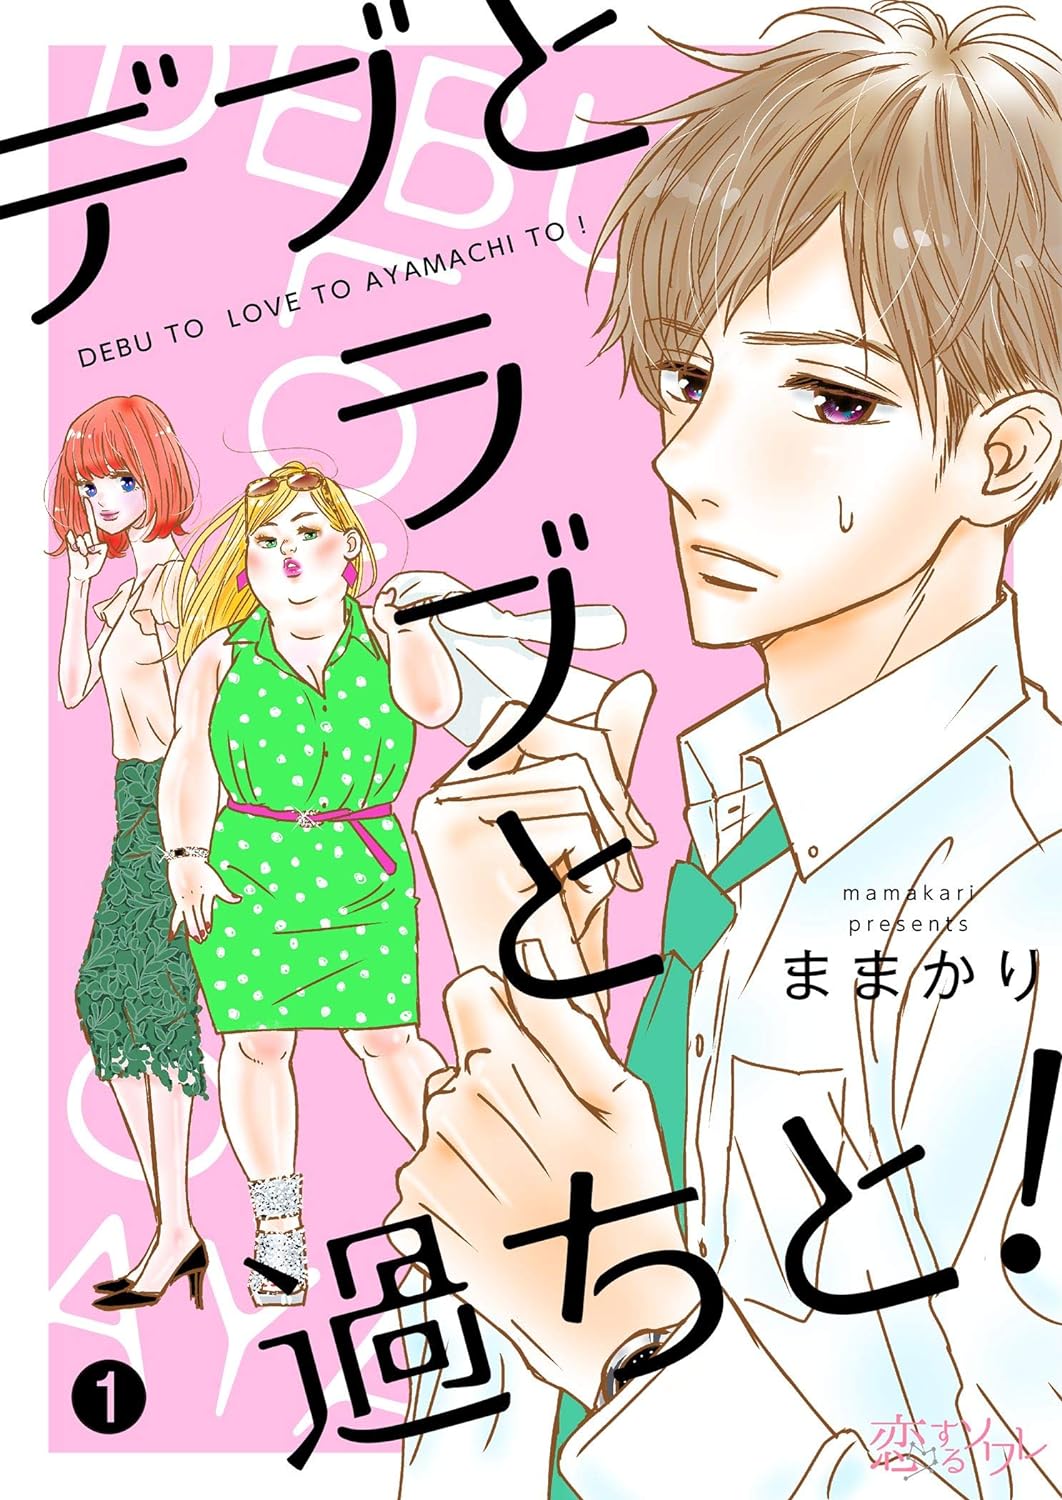 Debu To Love To Ayamachi Plus-sized Misadventures in Love! (manga) - Anime News Network